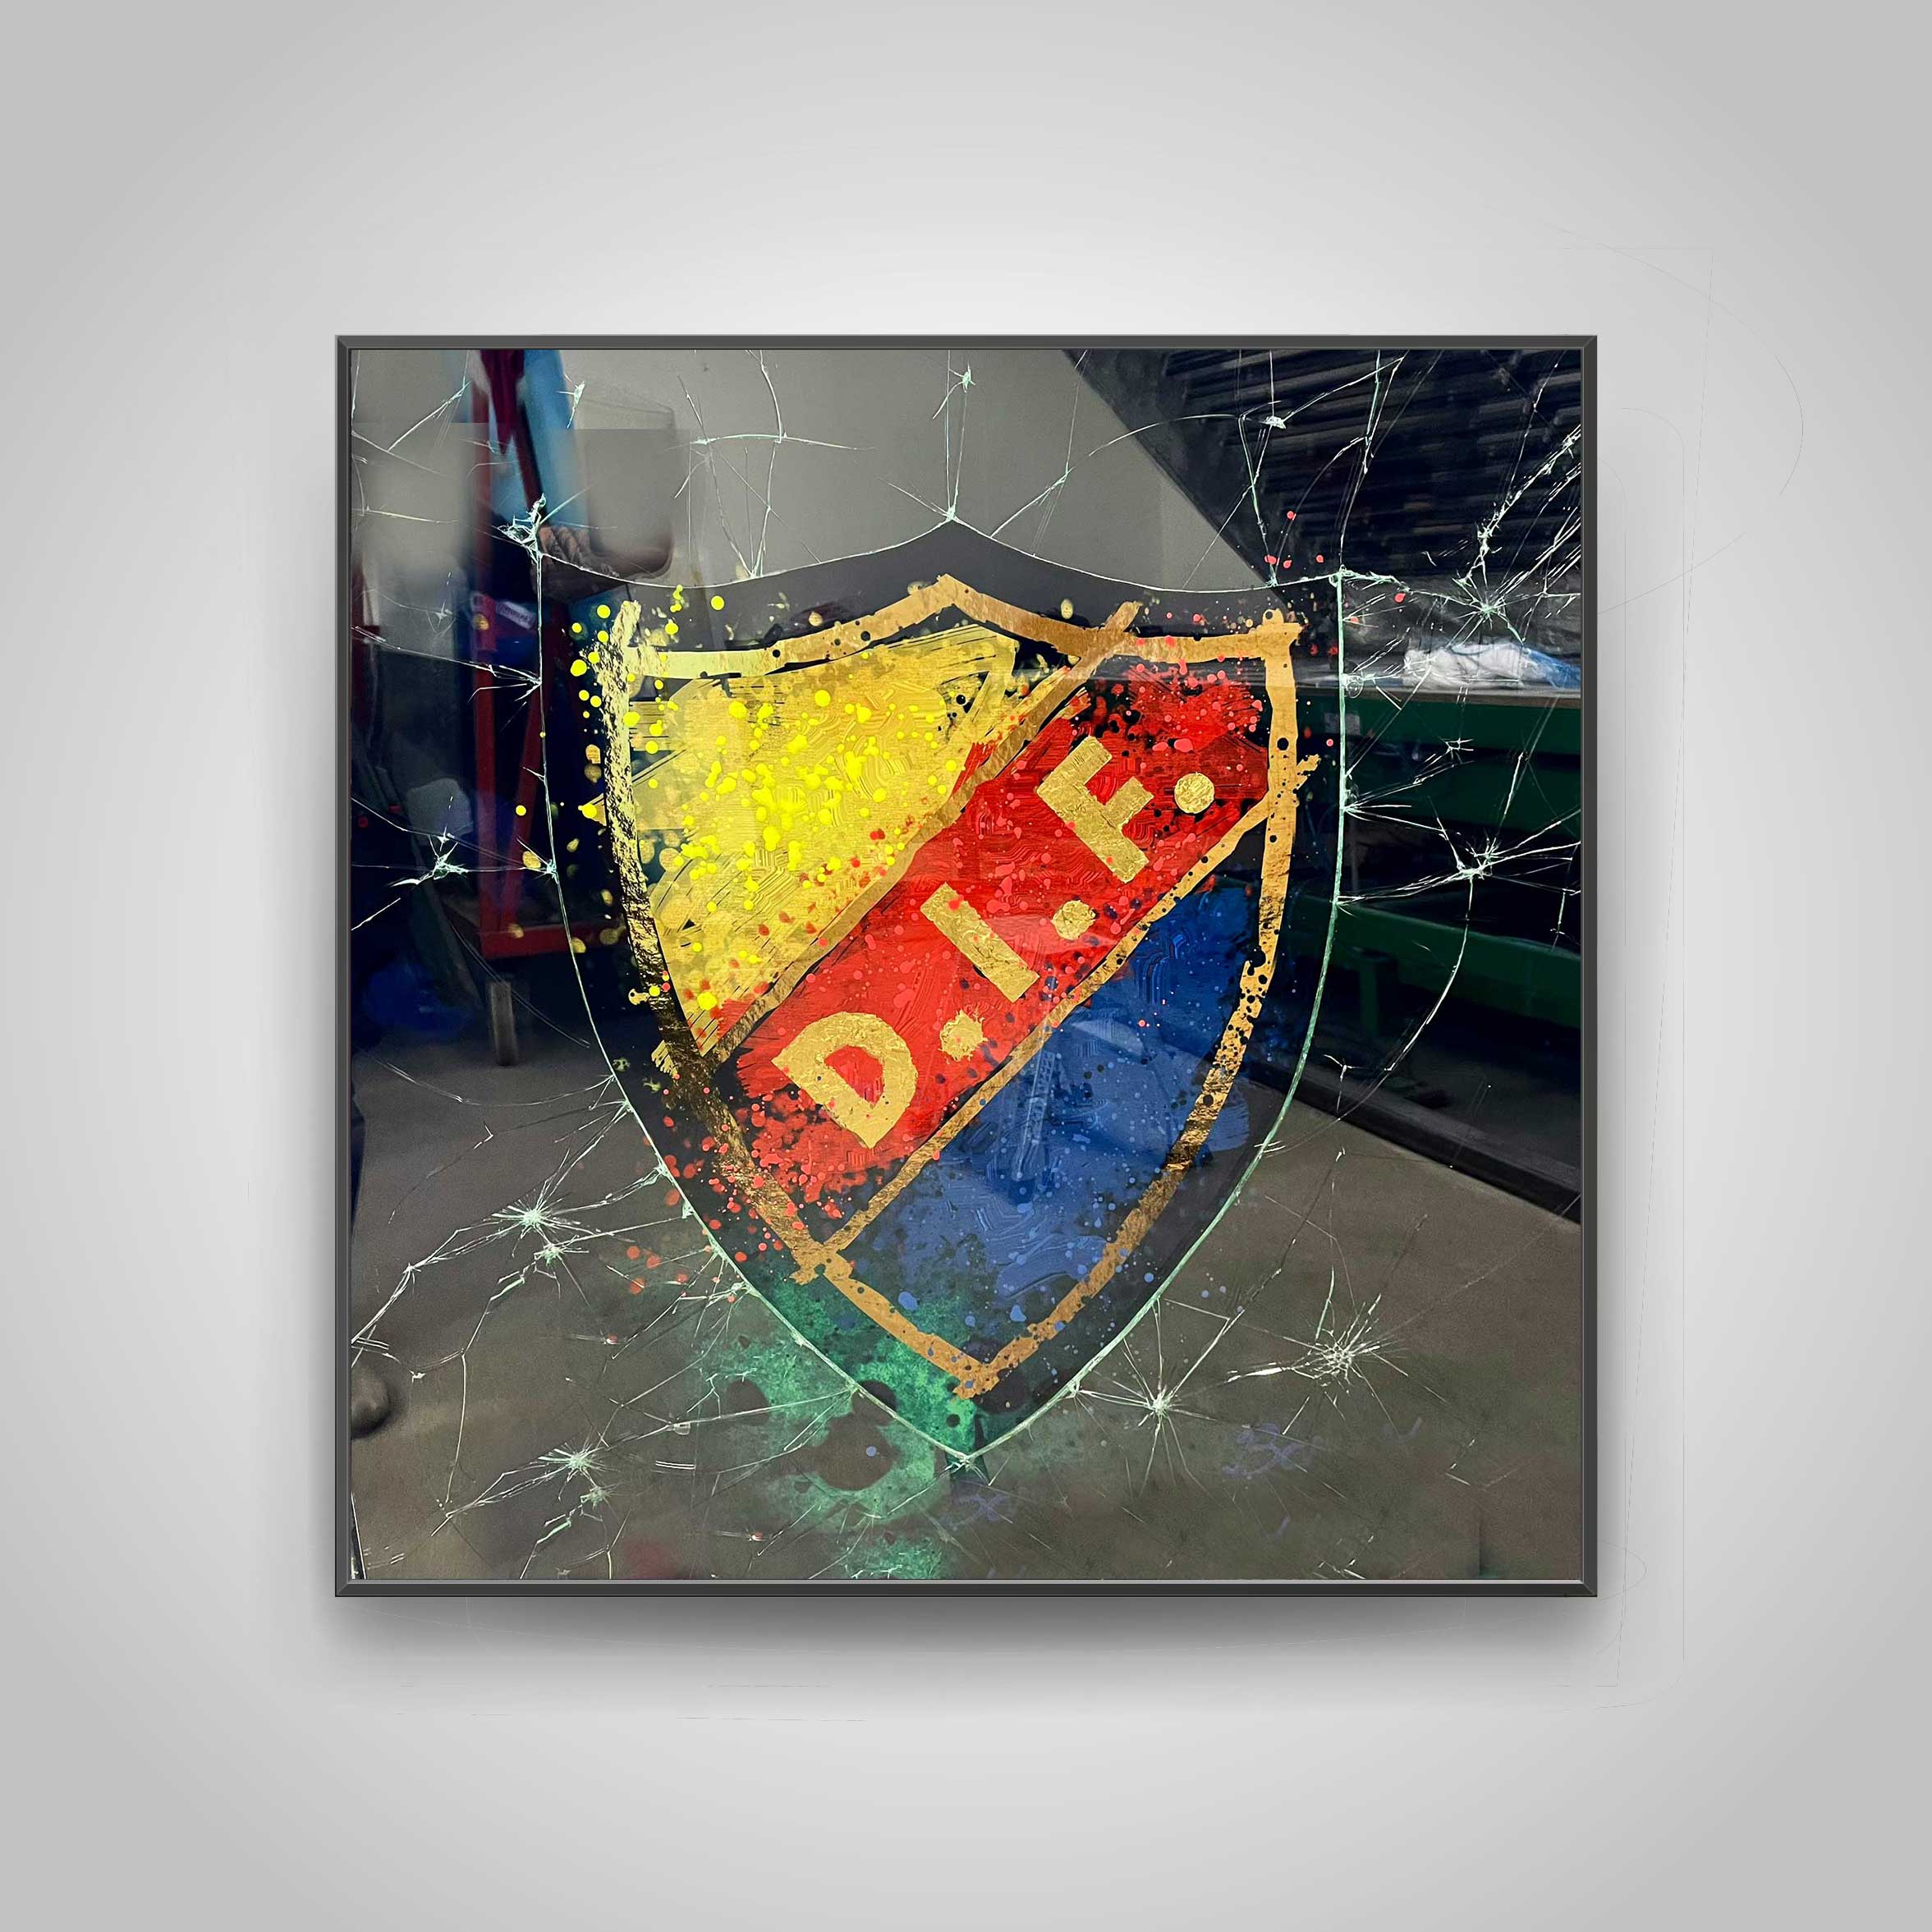 DIF-Perignon-inramad-1x1m-krossat-glas